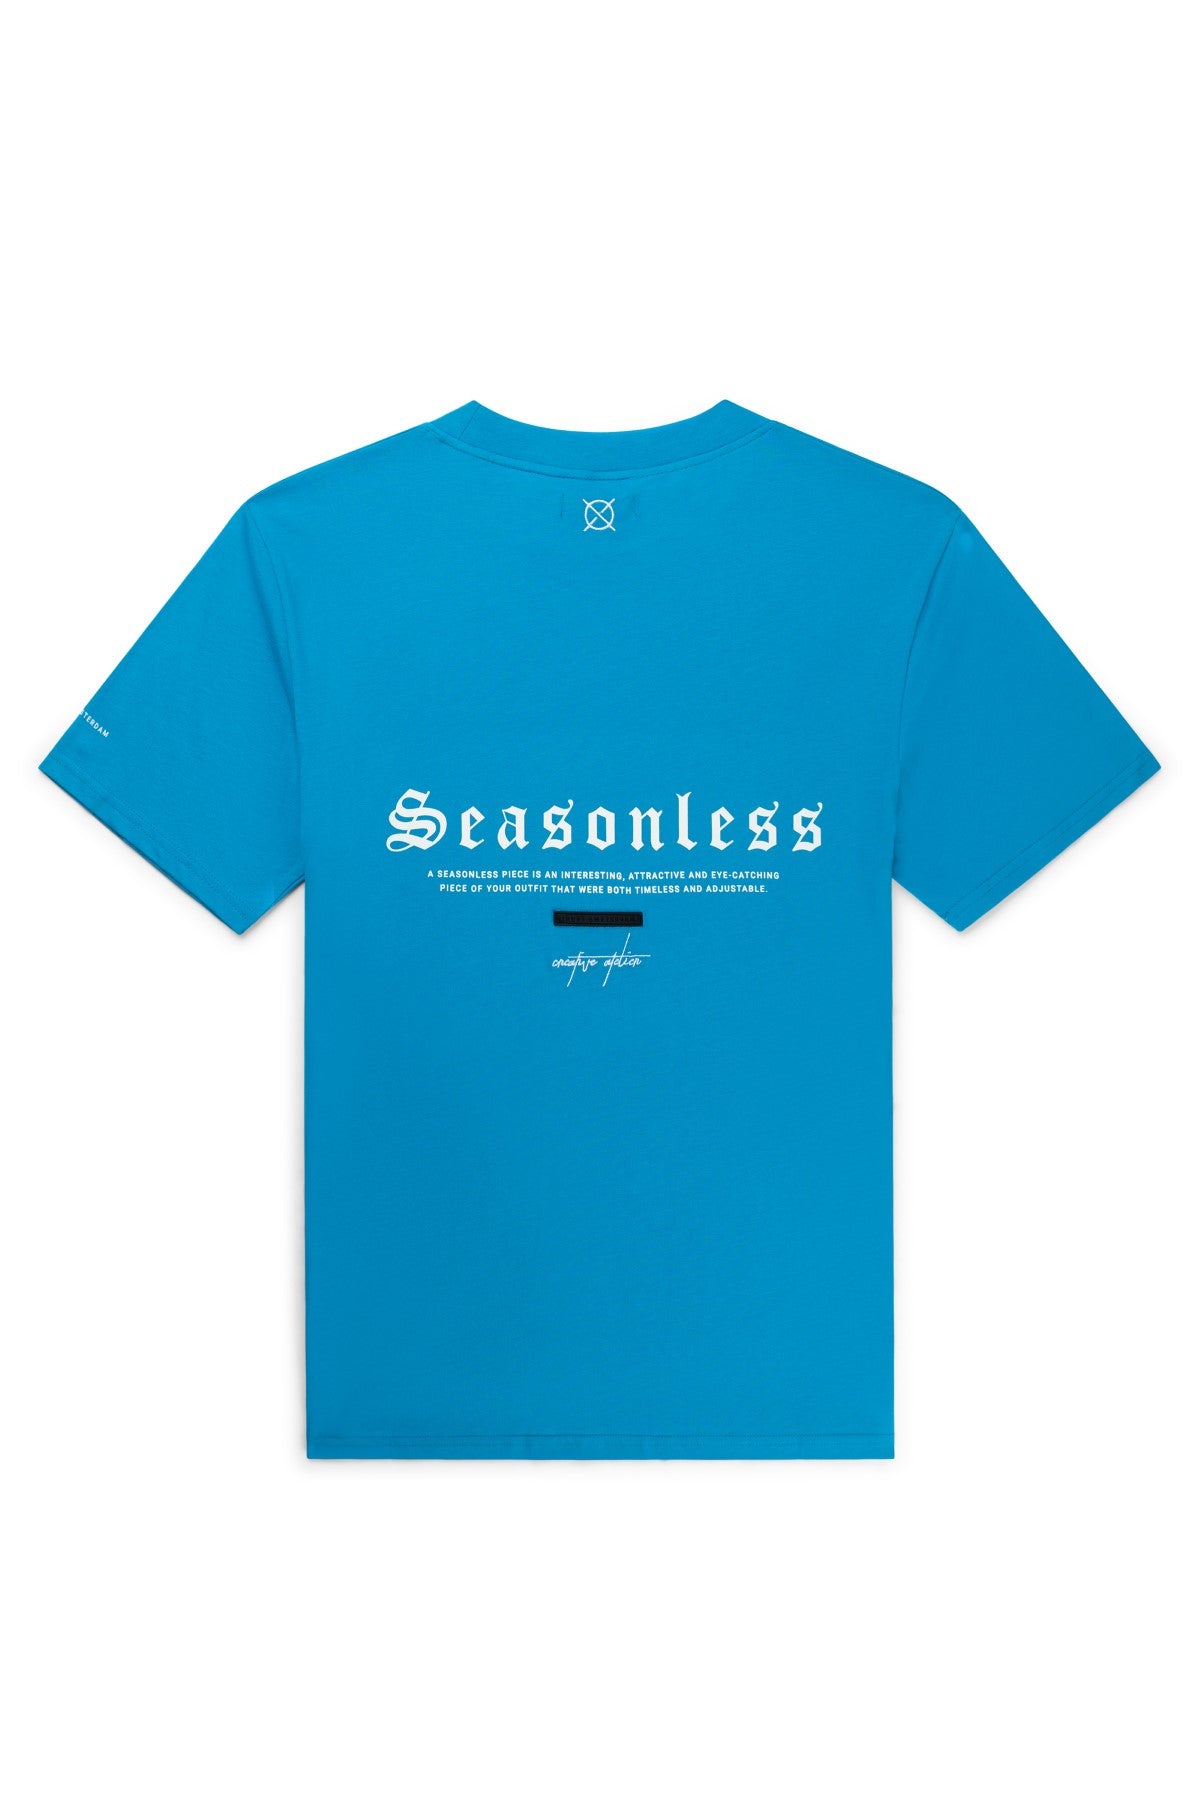 Seasonless T-Shirt - Light Blue